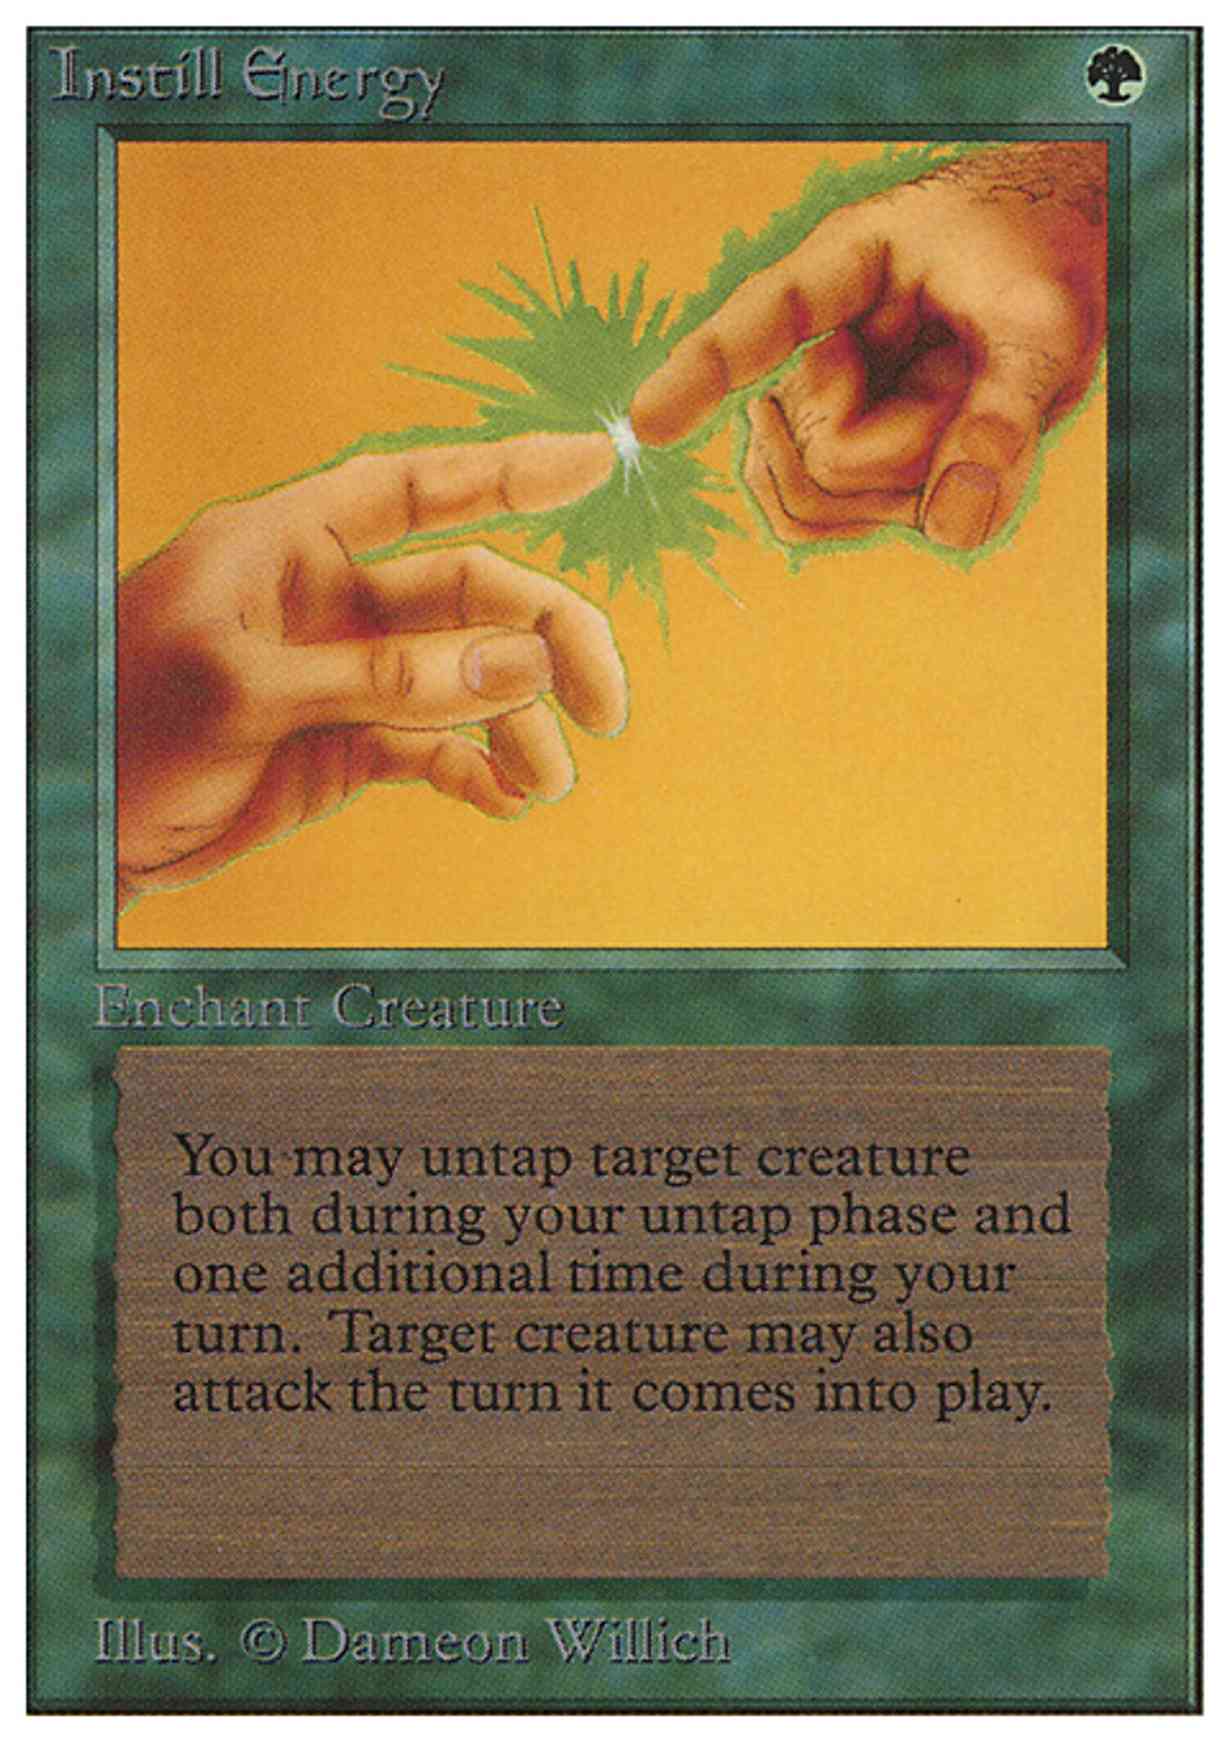 Instill Energy magic card front